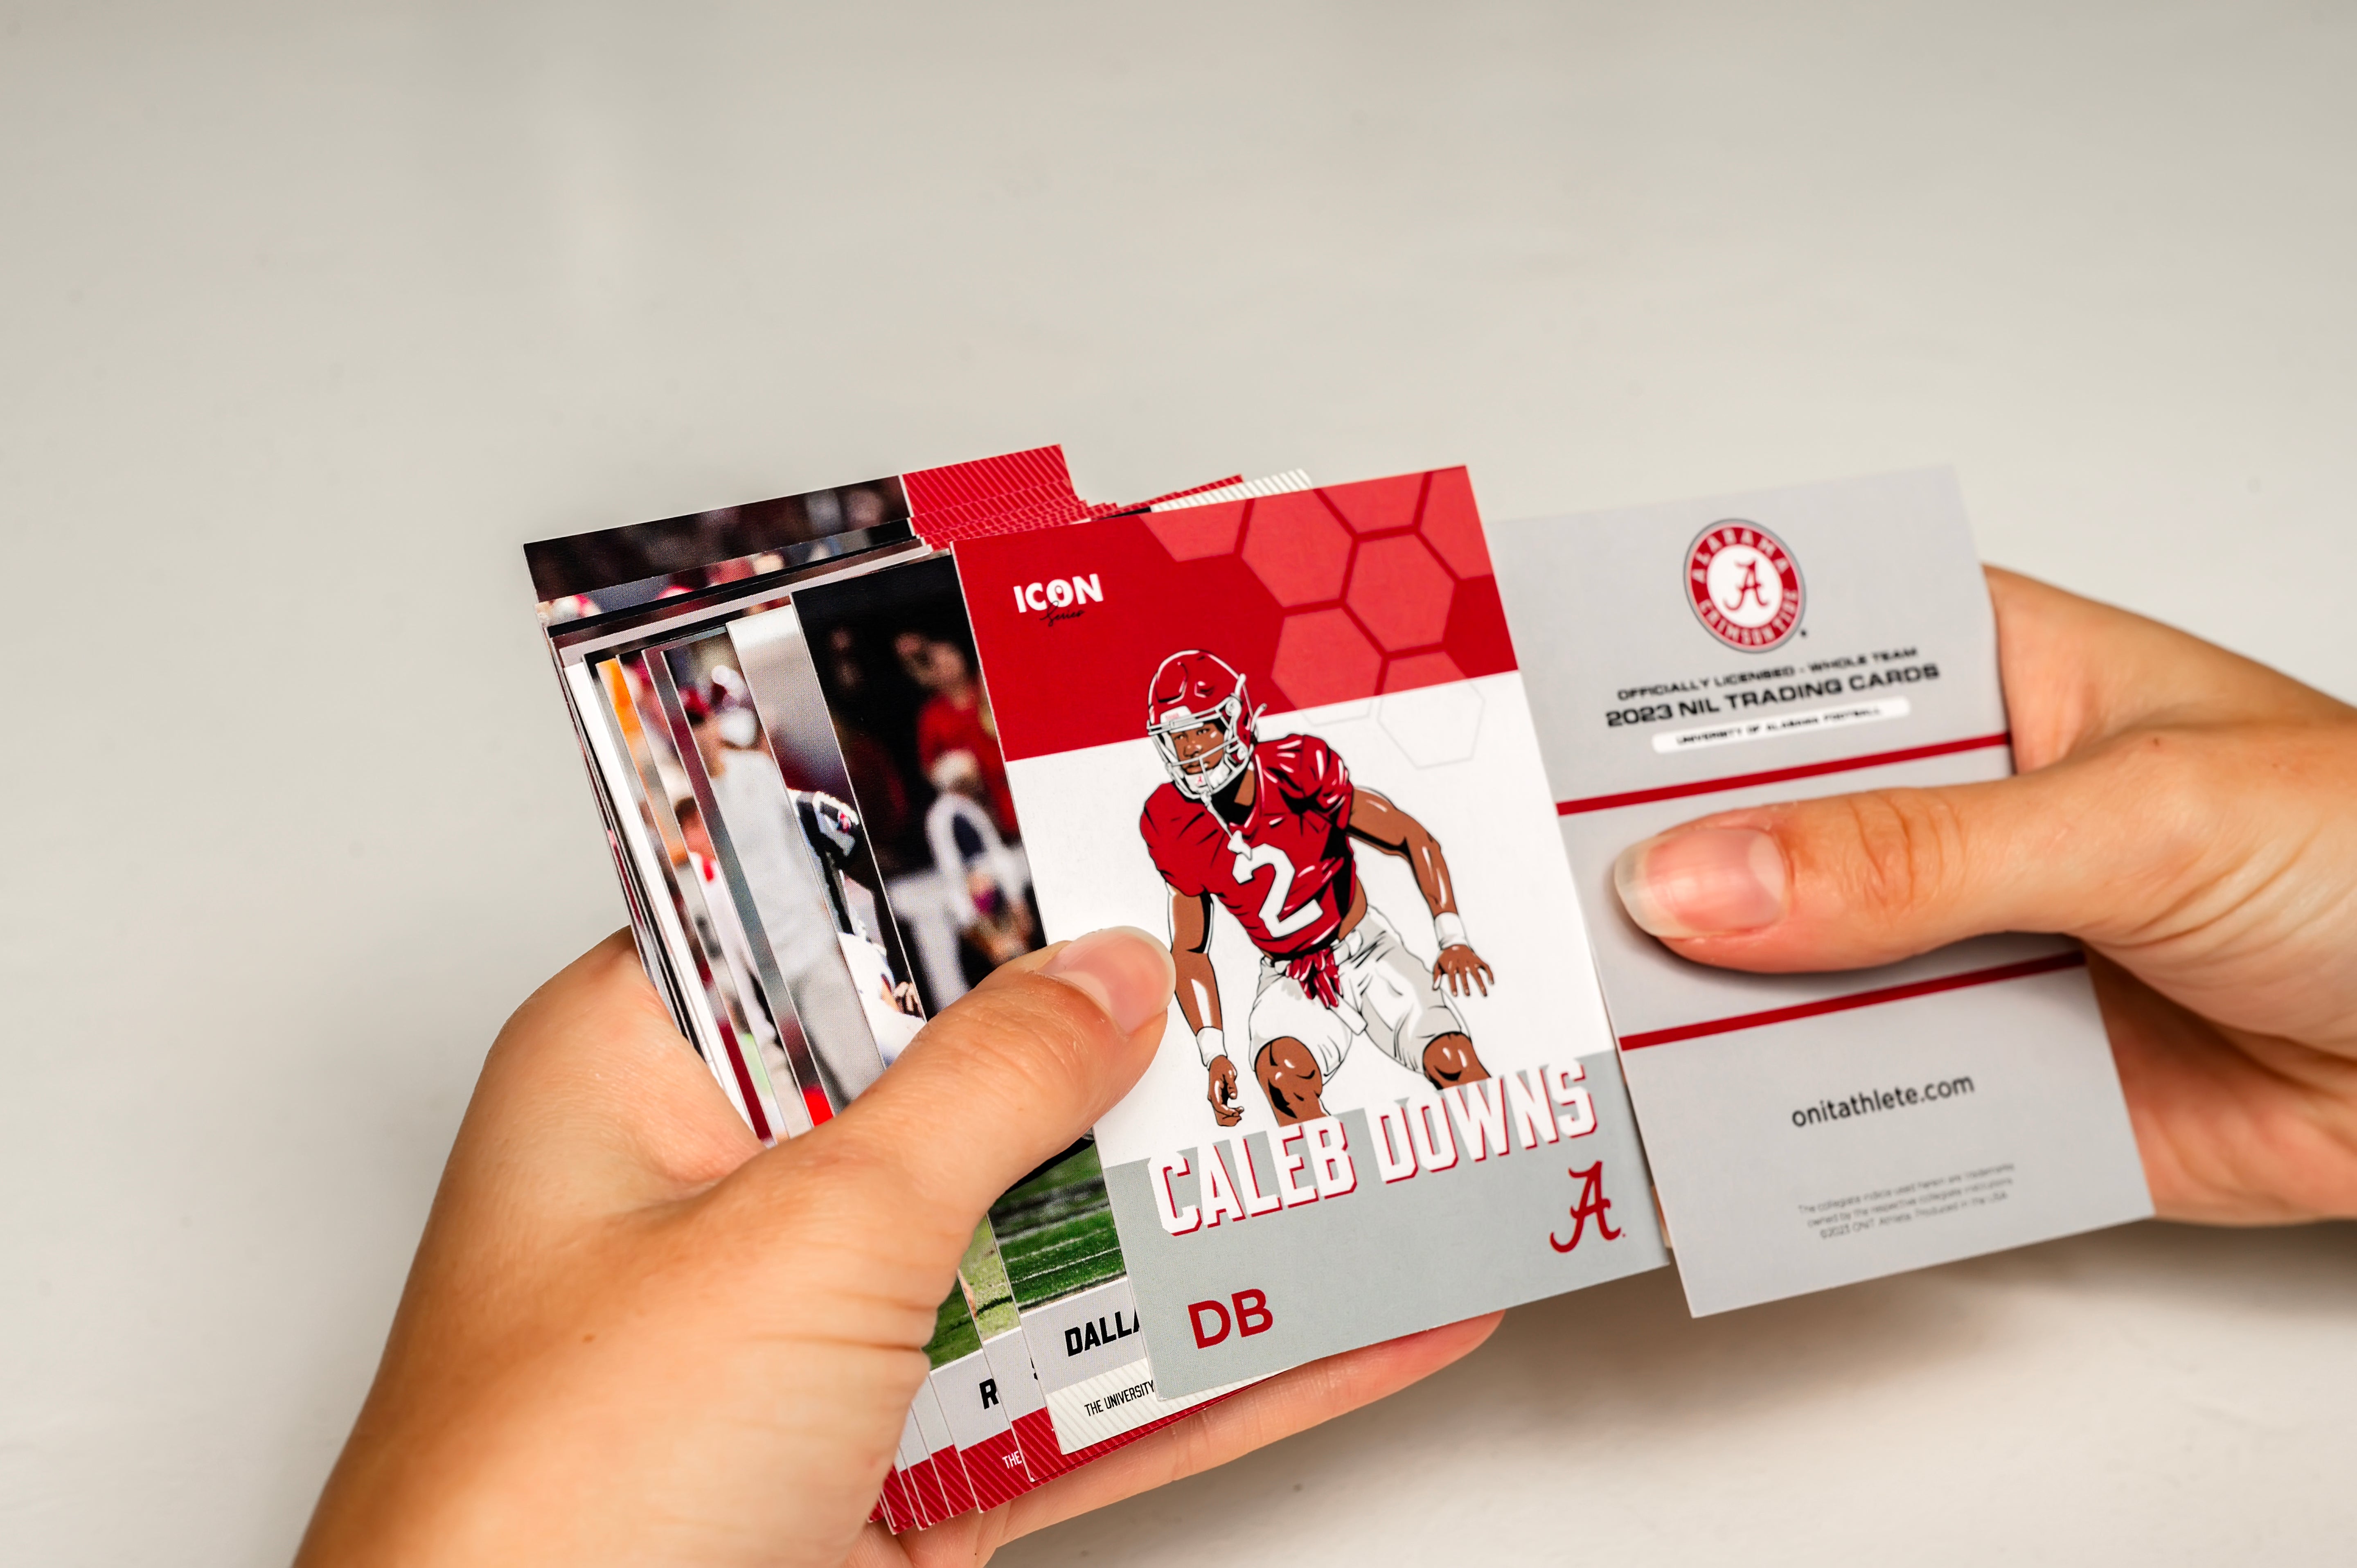 The University of Alabama® NIL Football - 2023 Trading Cards - Single Pack